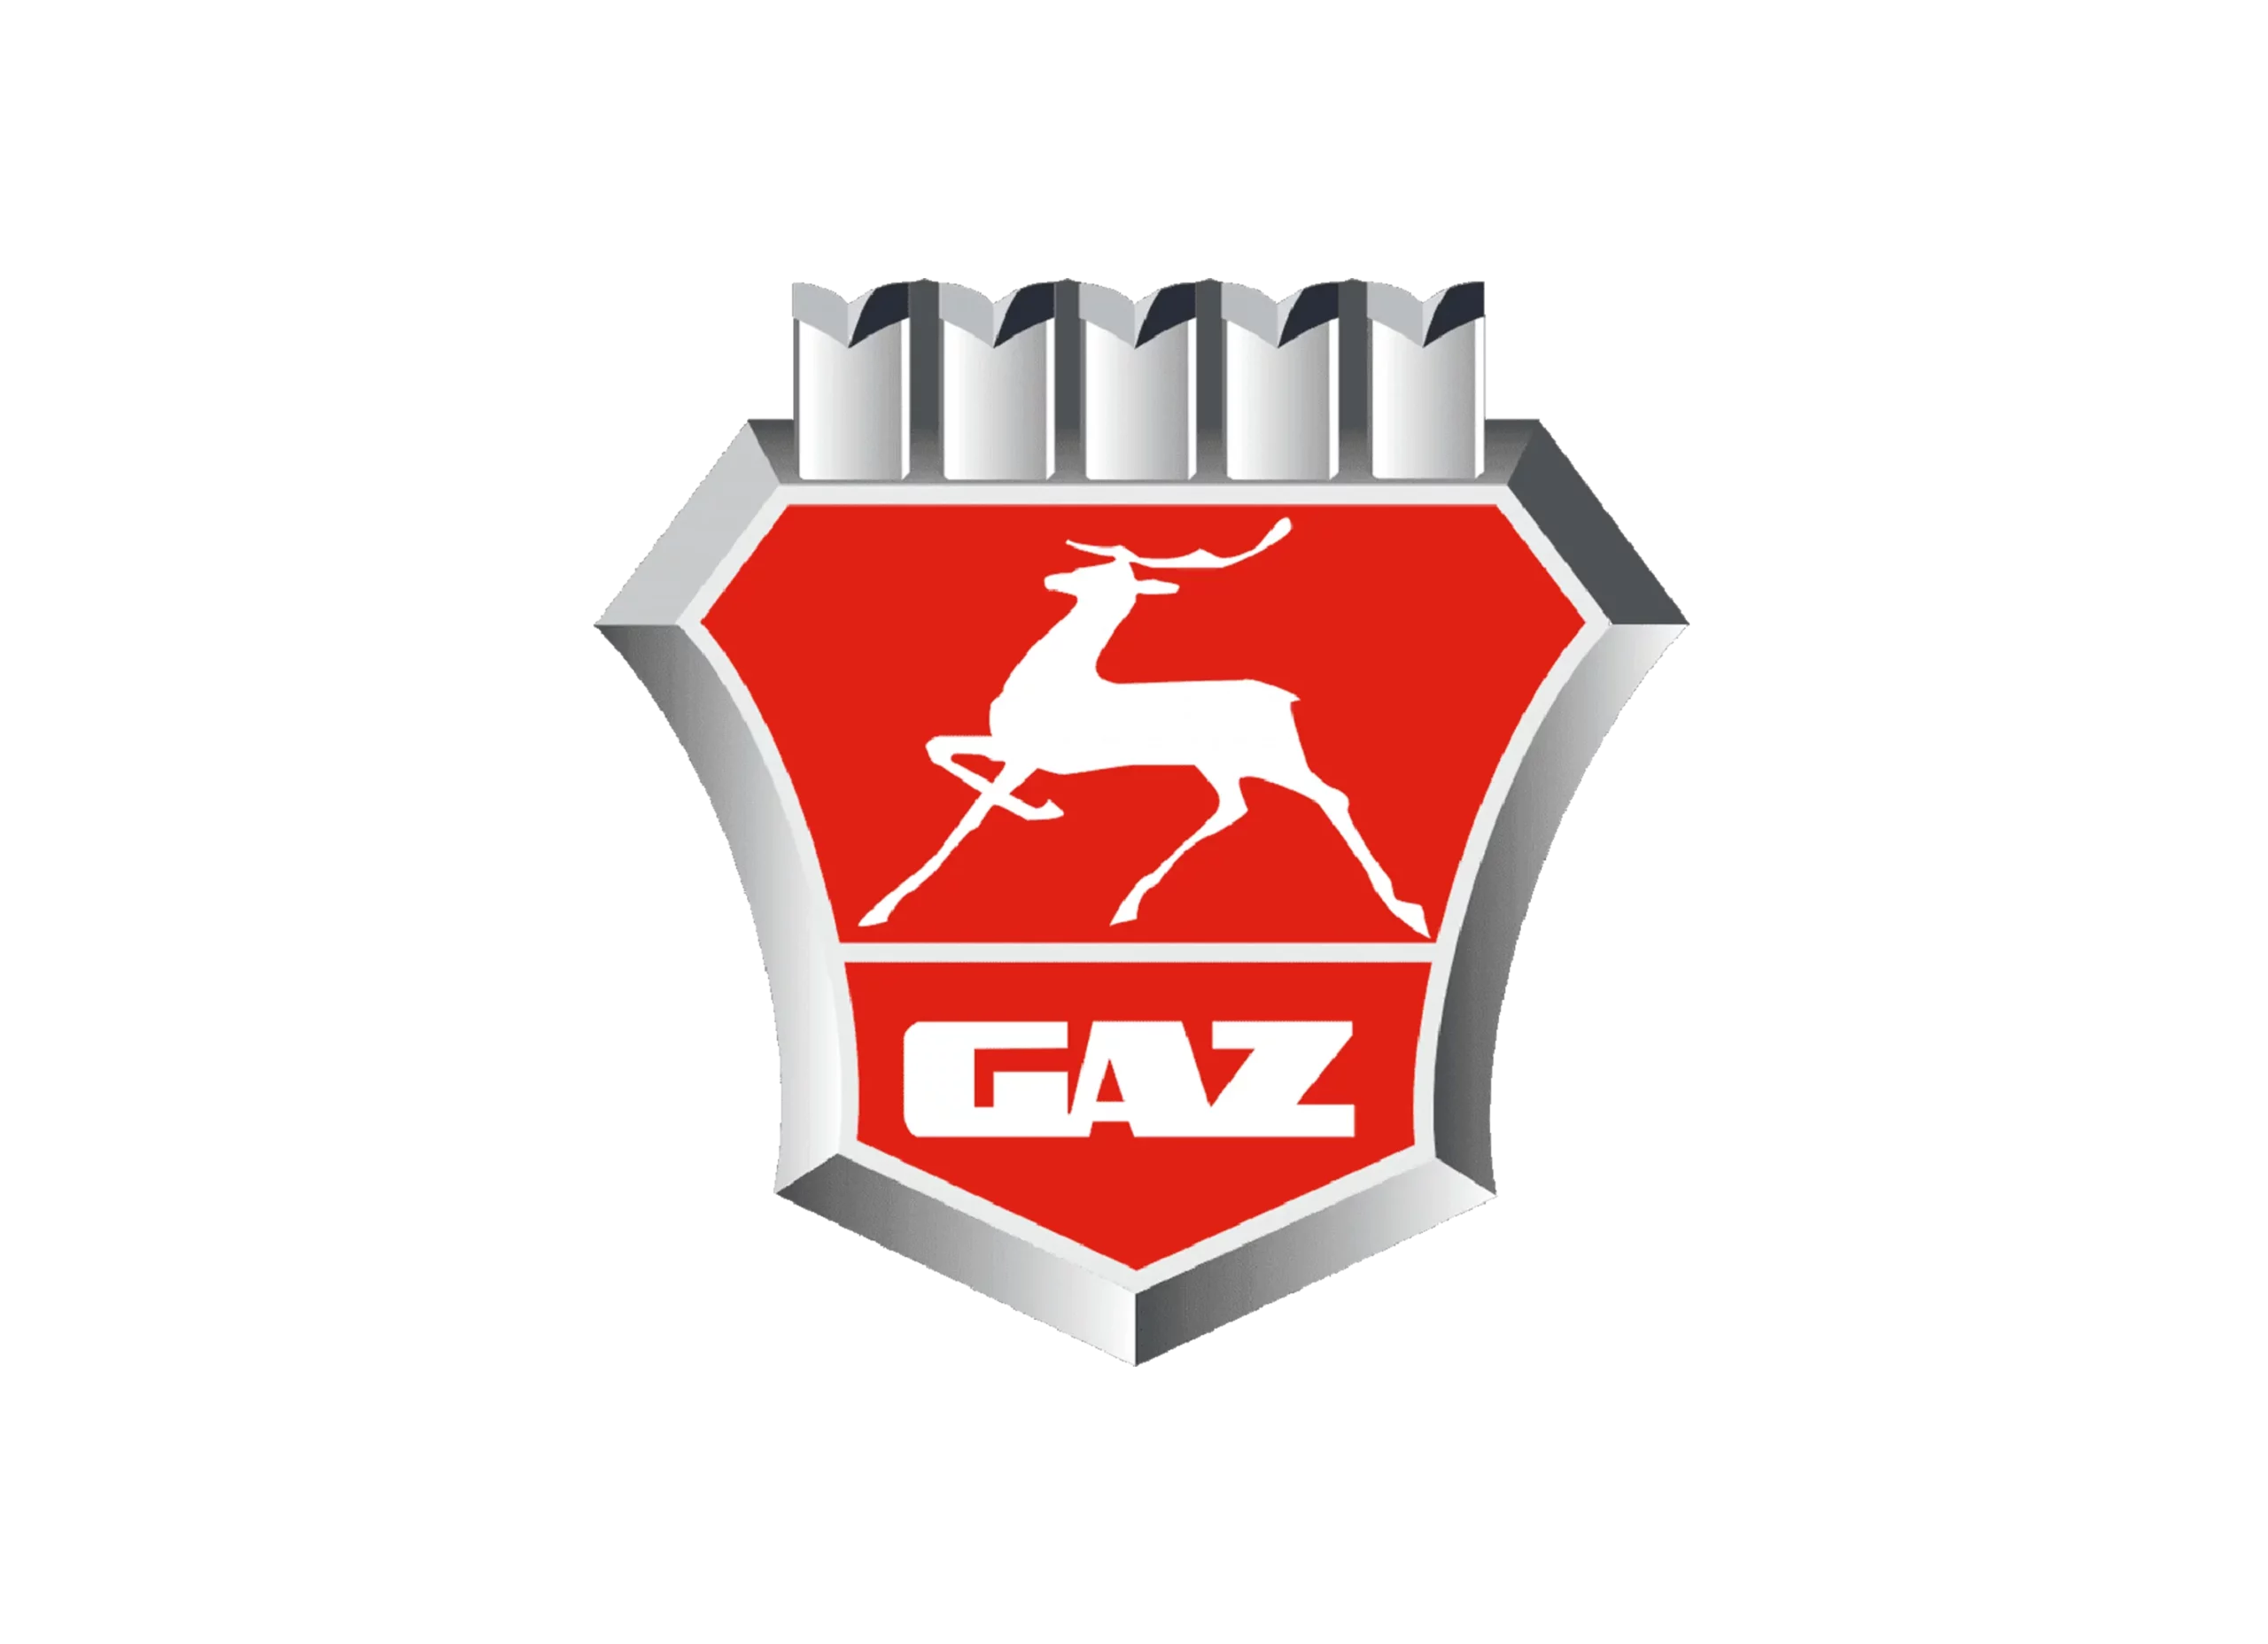 GAZ logo 1986-1996